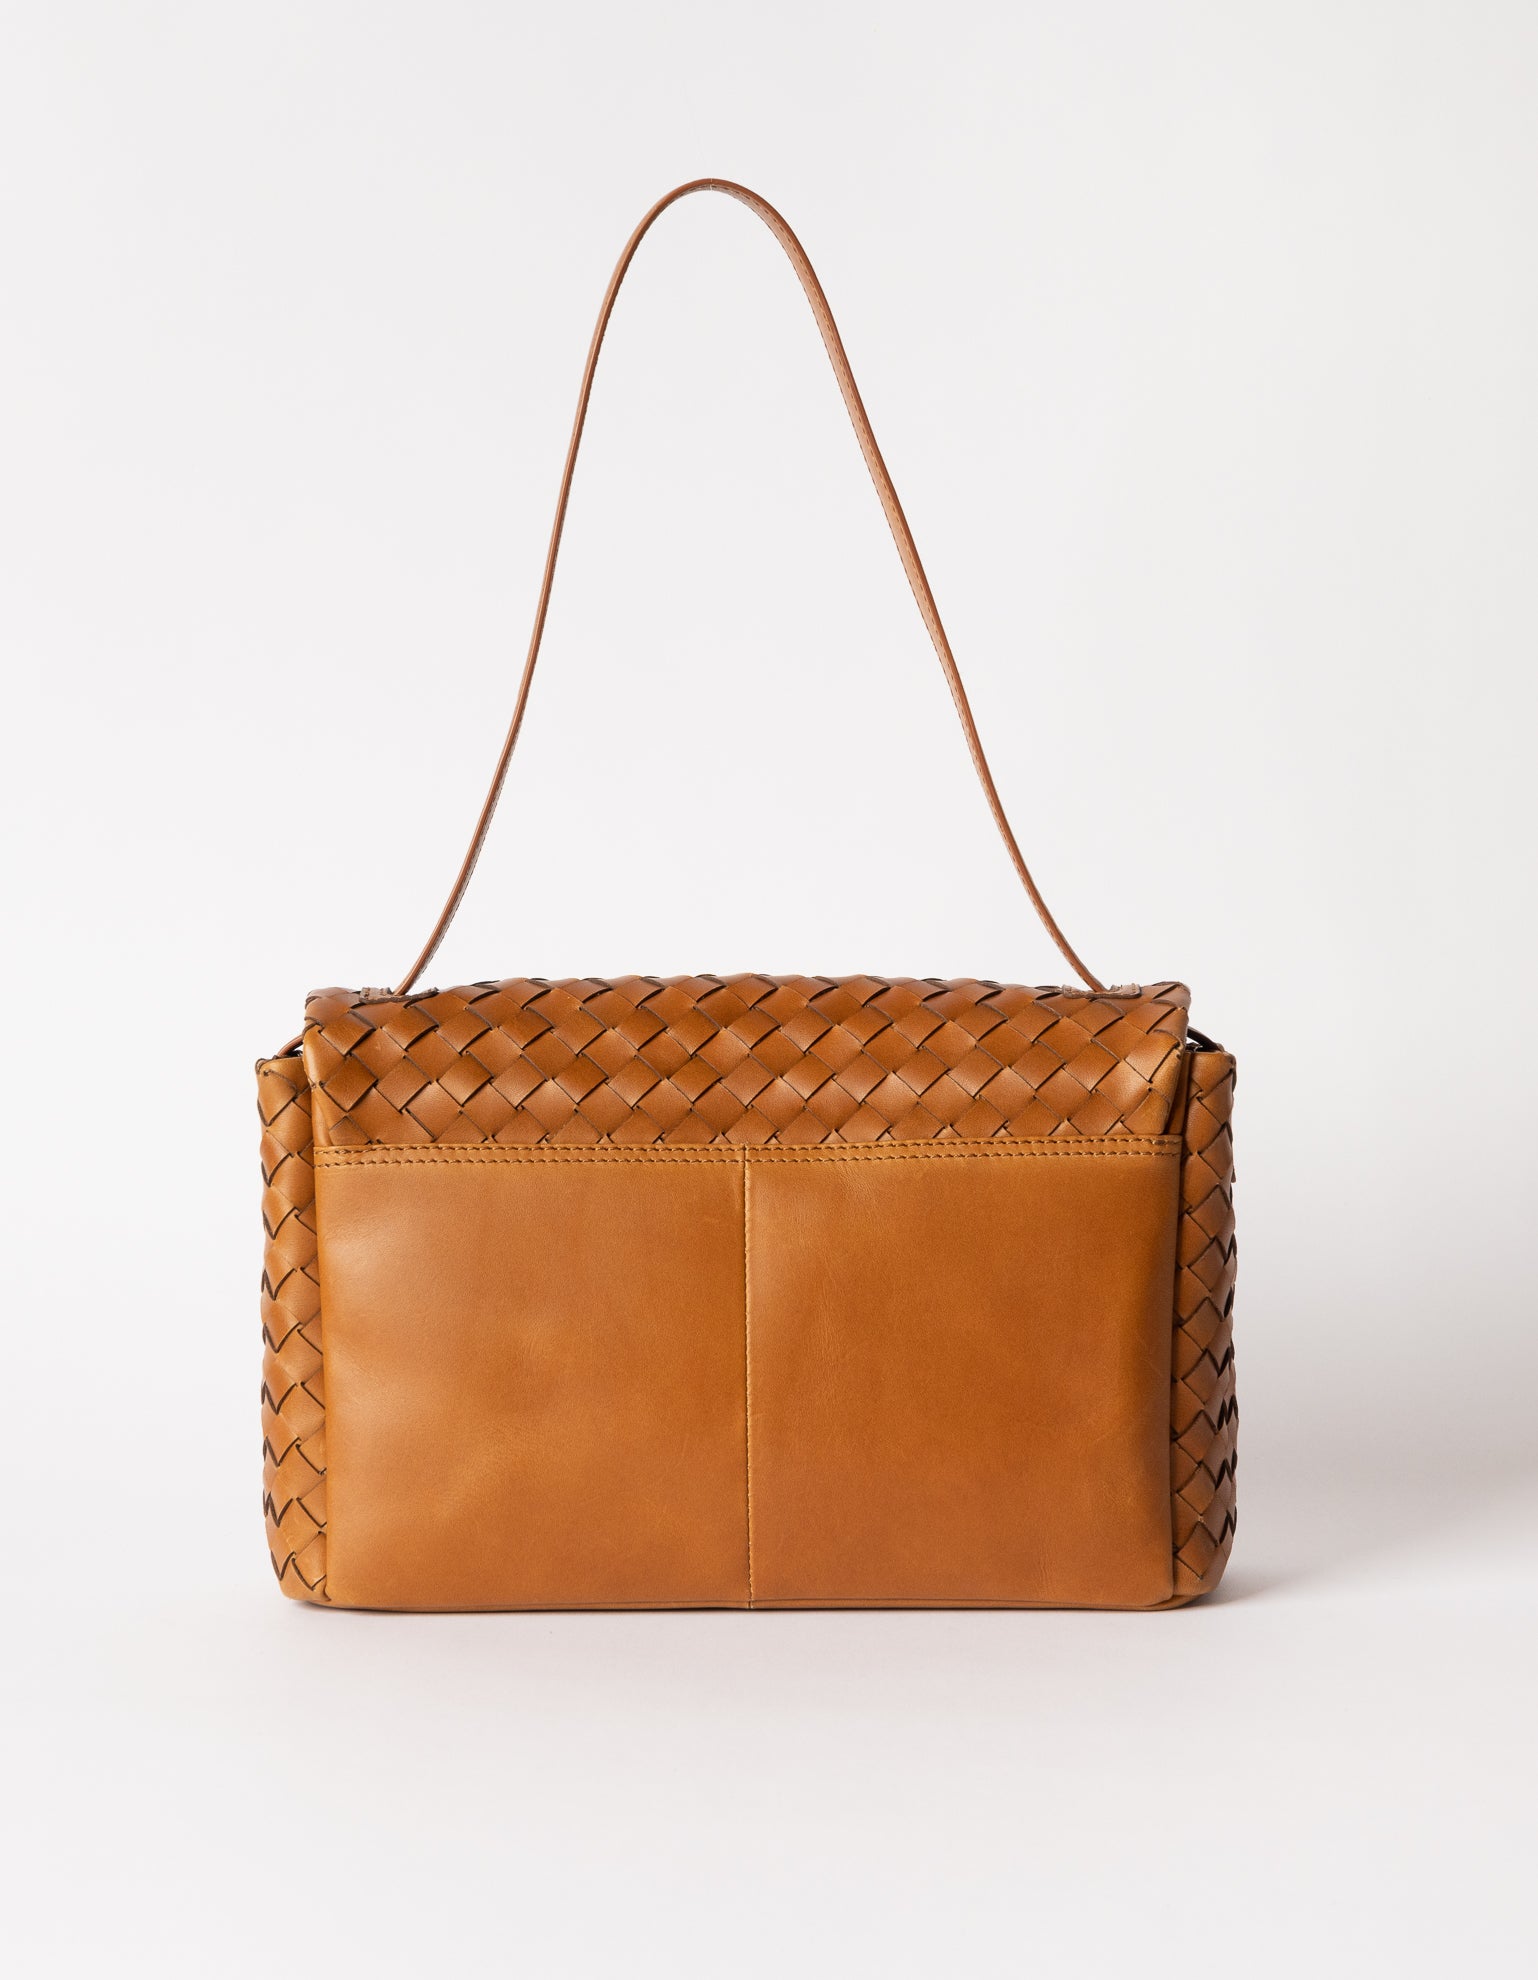 Kenzie - Cognac Woven Classic Leather - Woven Leather Shoulder Bag